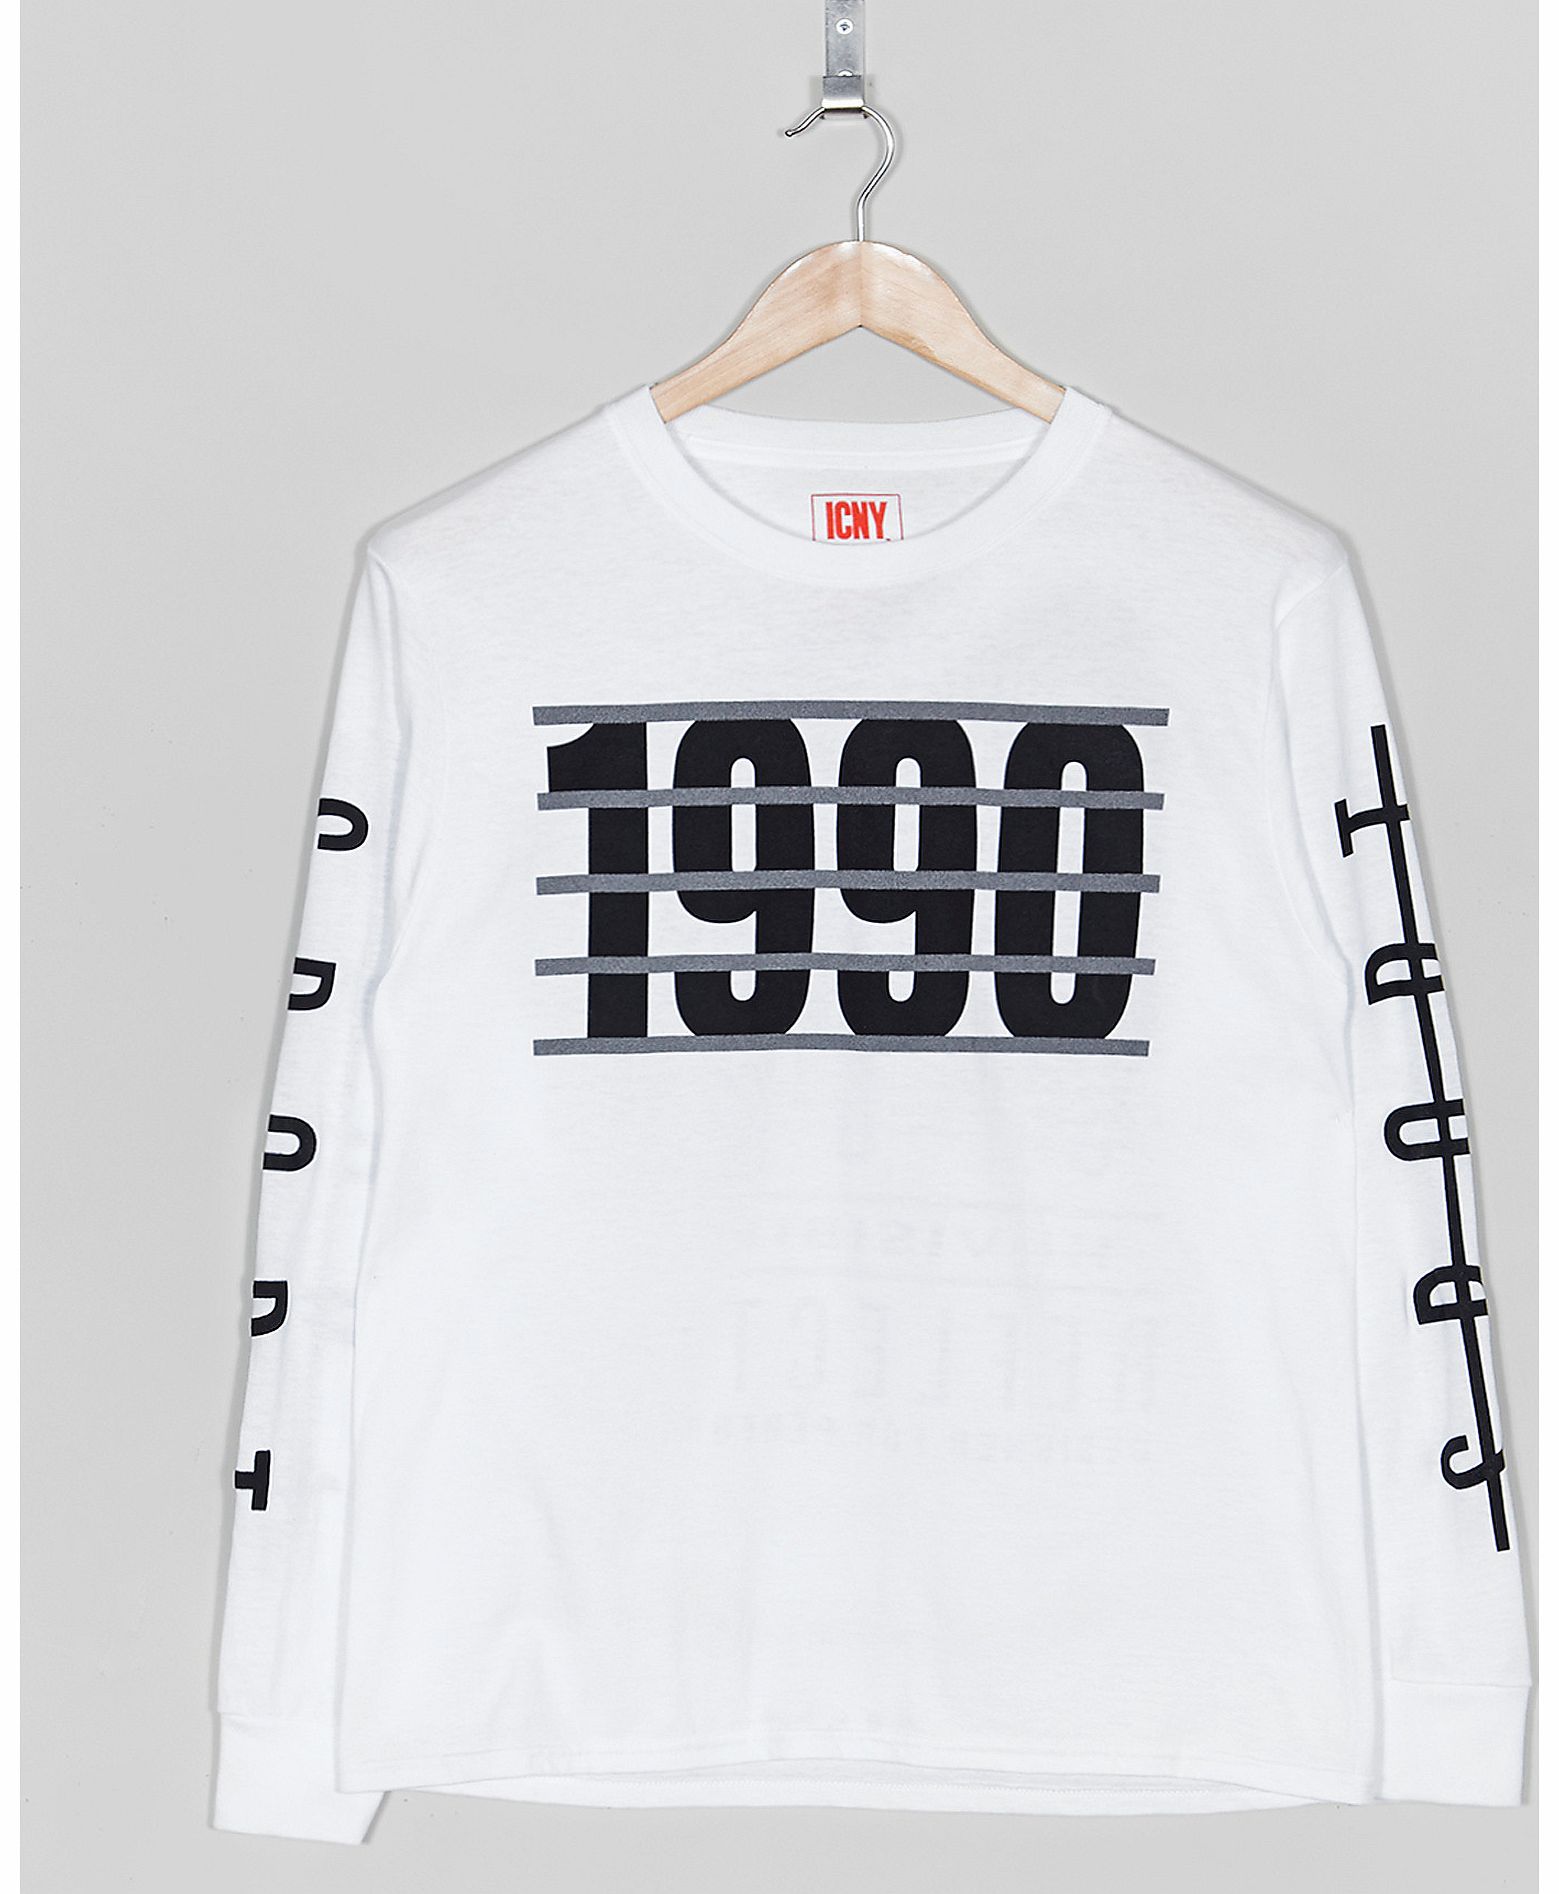 1990 Long Sleeve T-Shirt